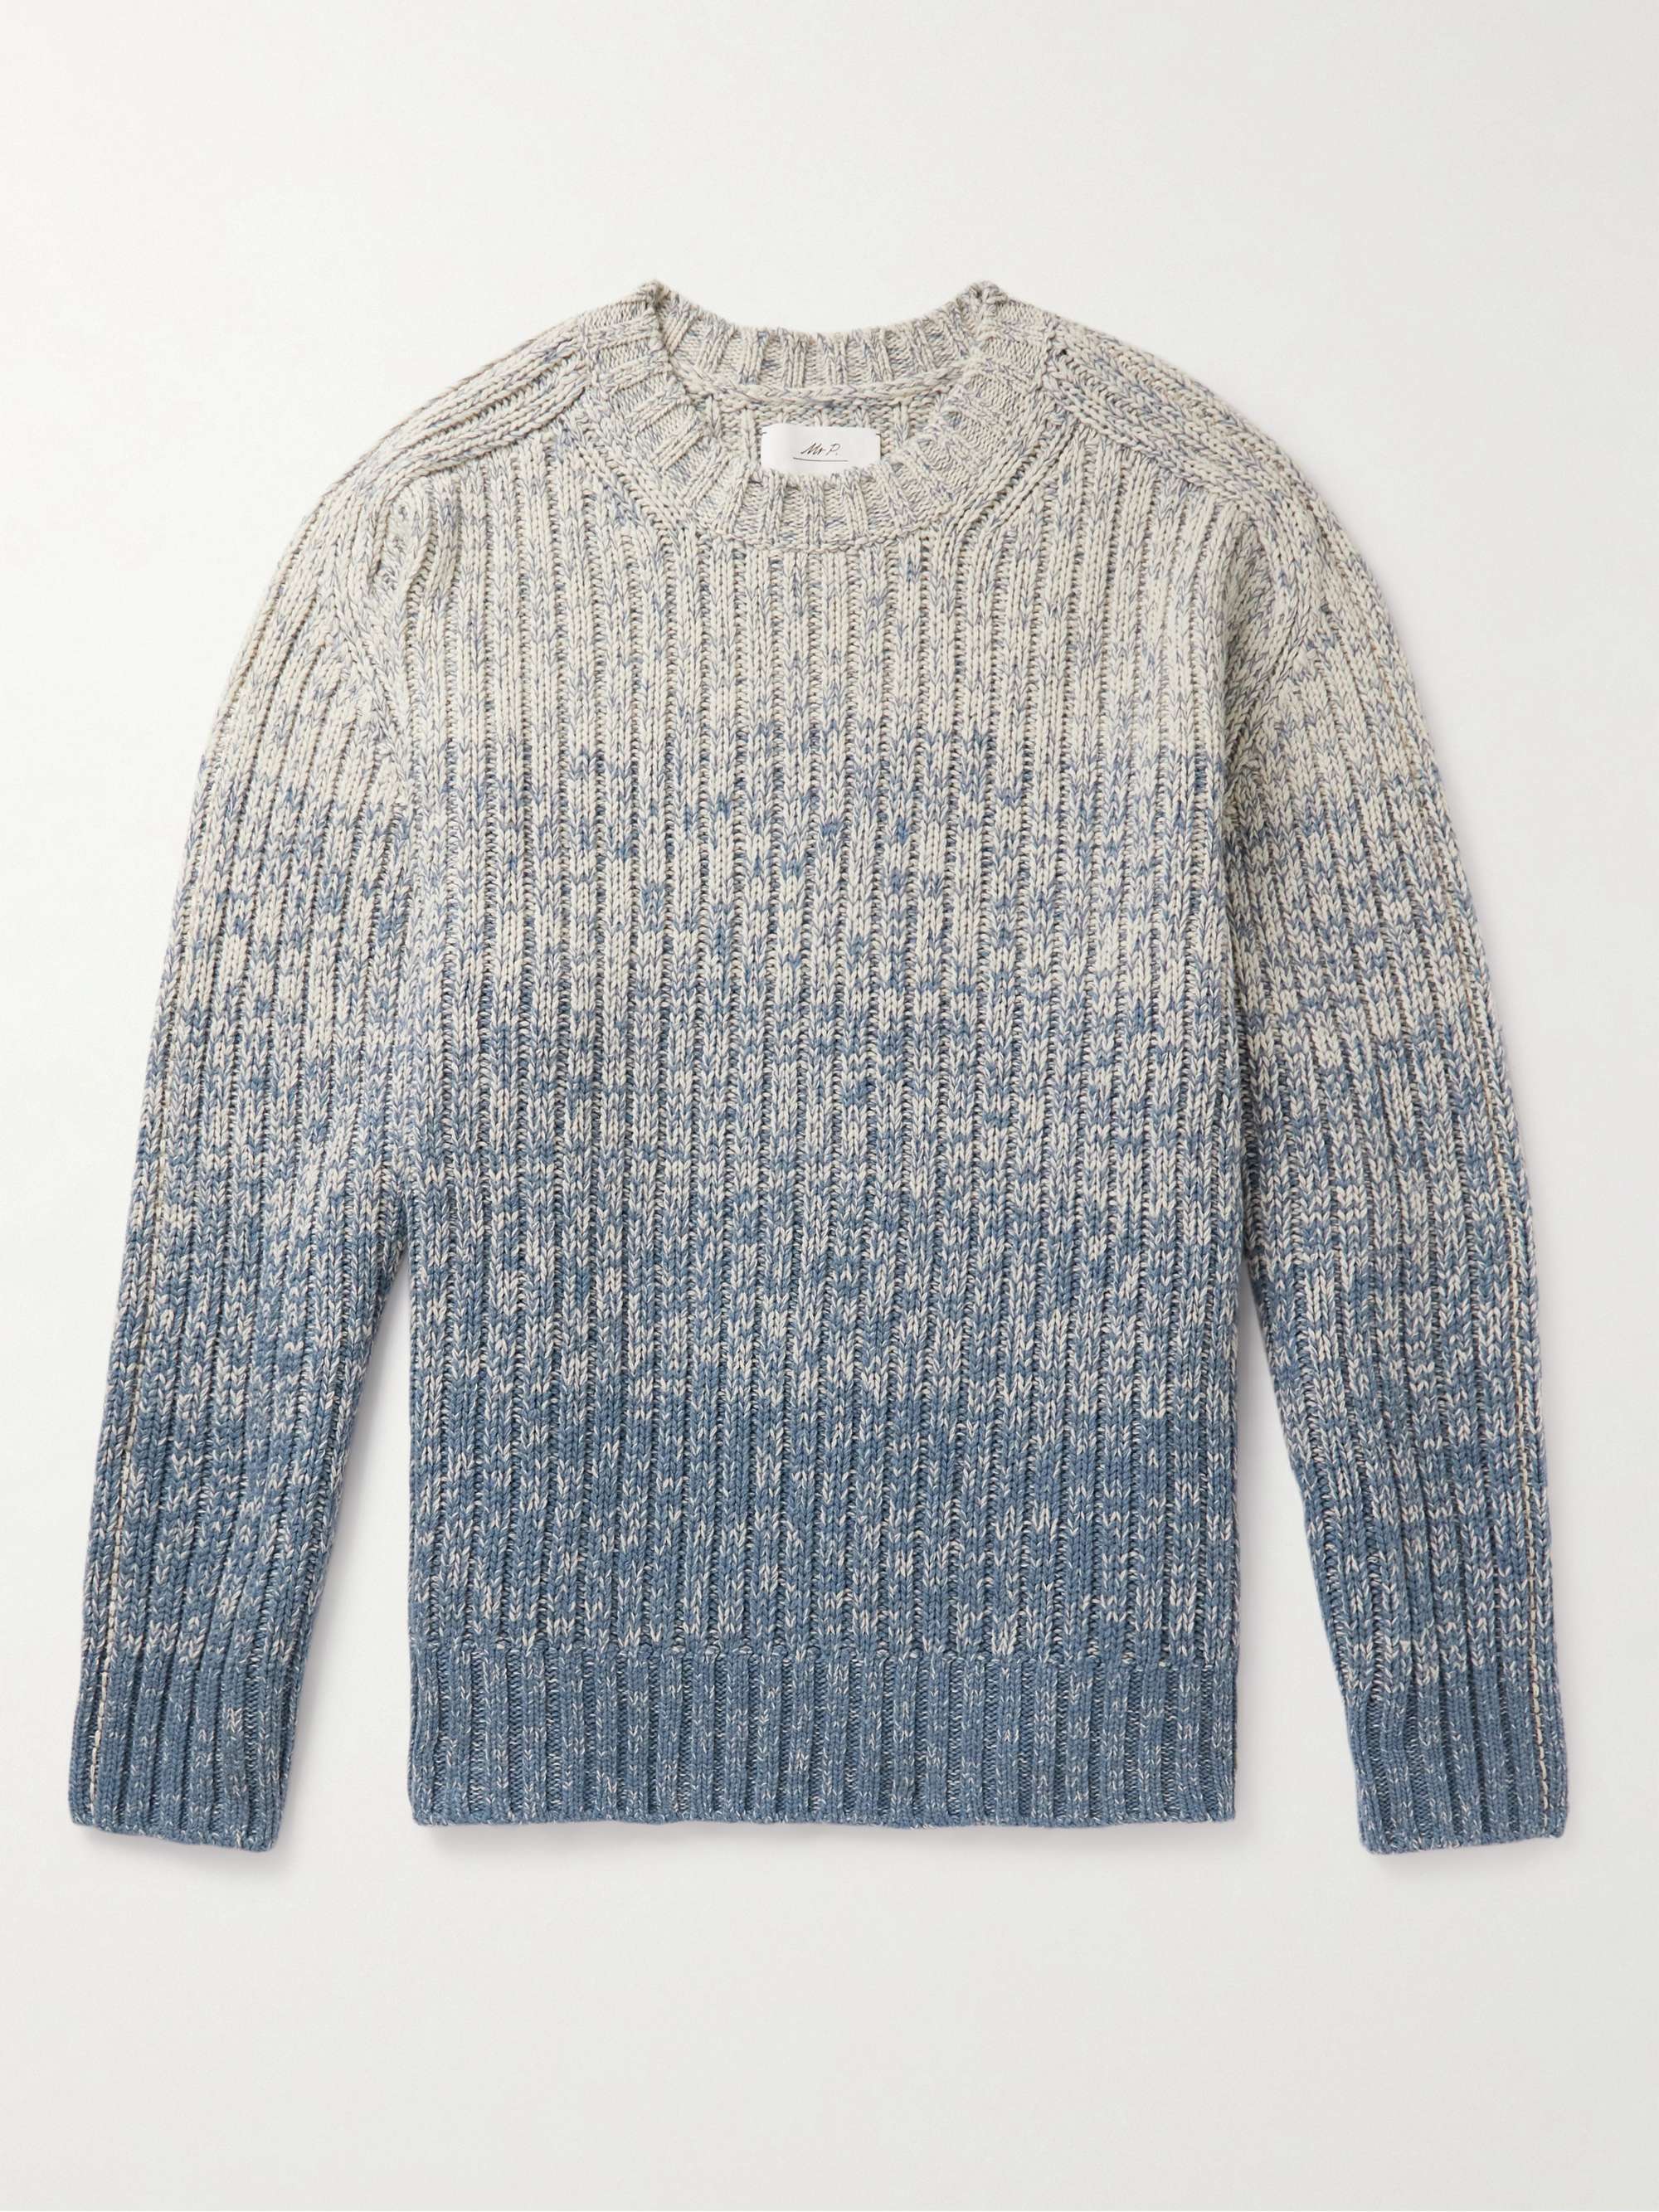 MR P. Dégradé Crocheted Cashmere and Wool-Blend Sweater for Men | MR PORTER